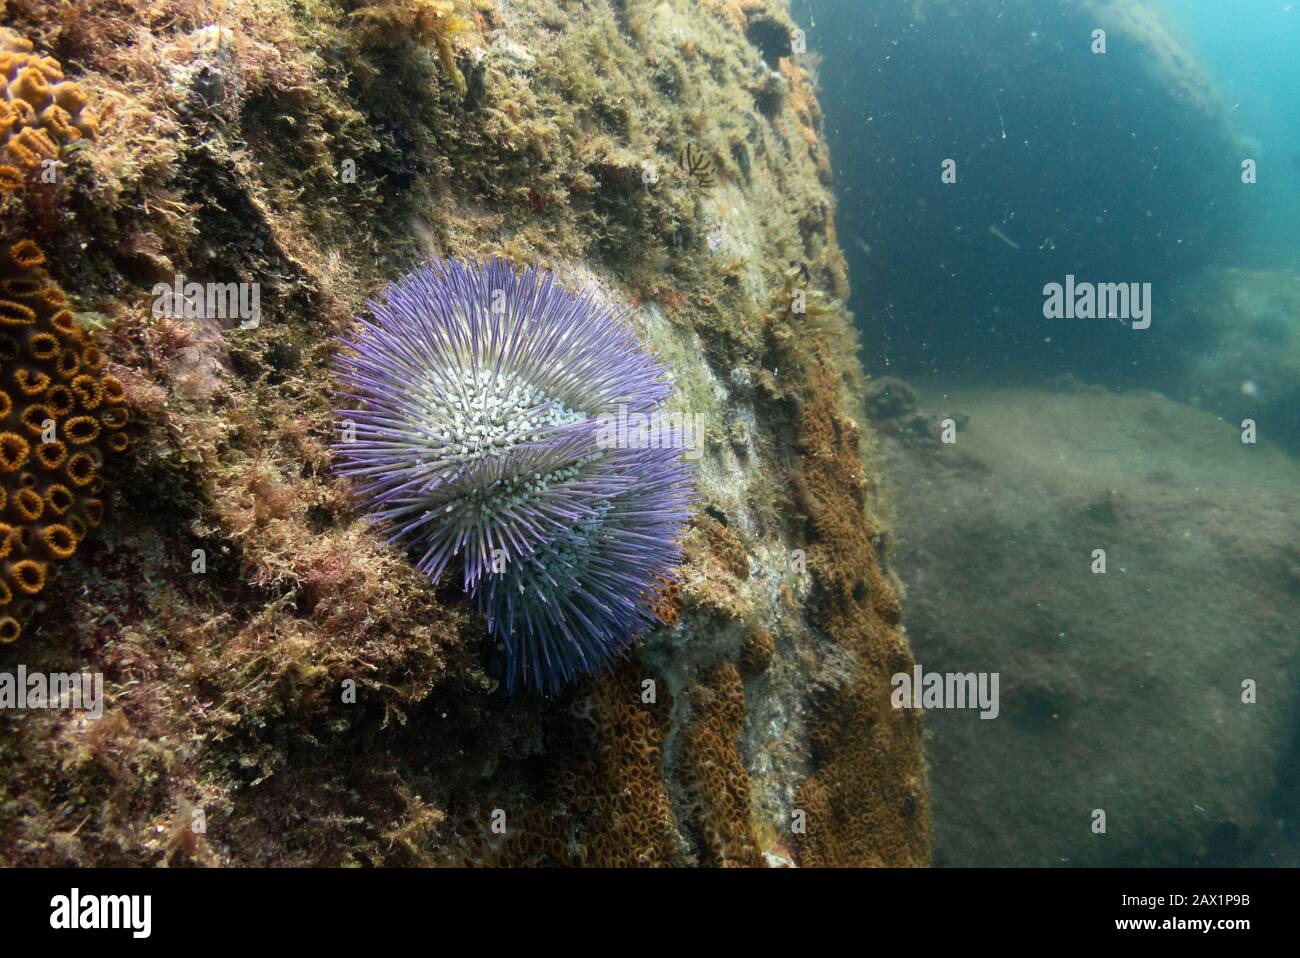 A Green Sea Urchin (Lytechinus variegatus) from Ilhabela, SE Brazil coast Stock Photo